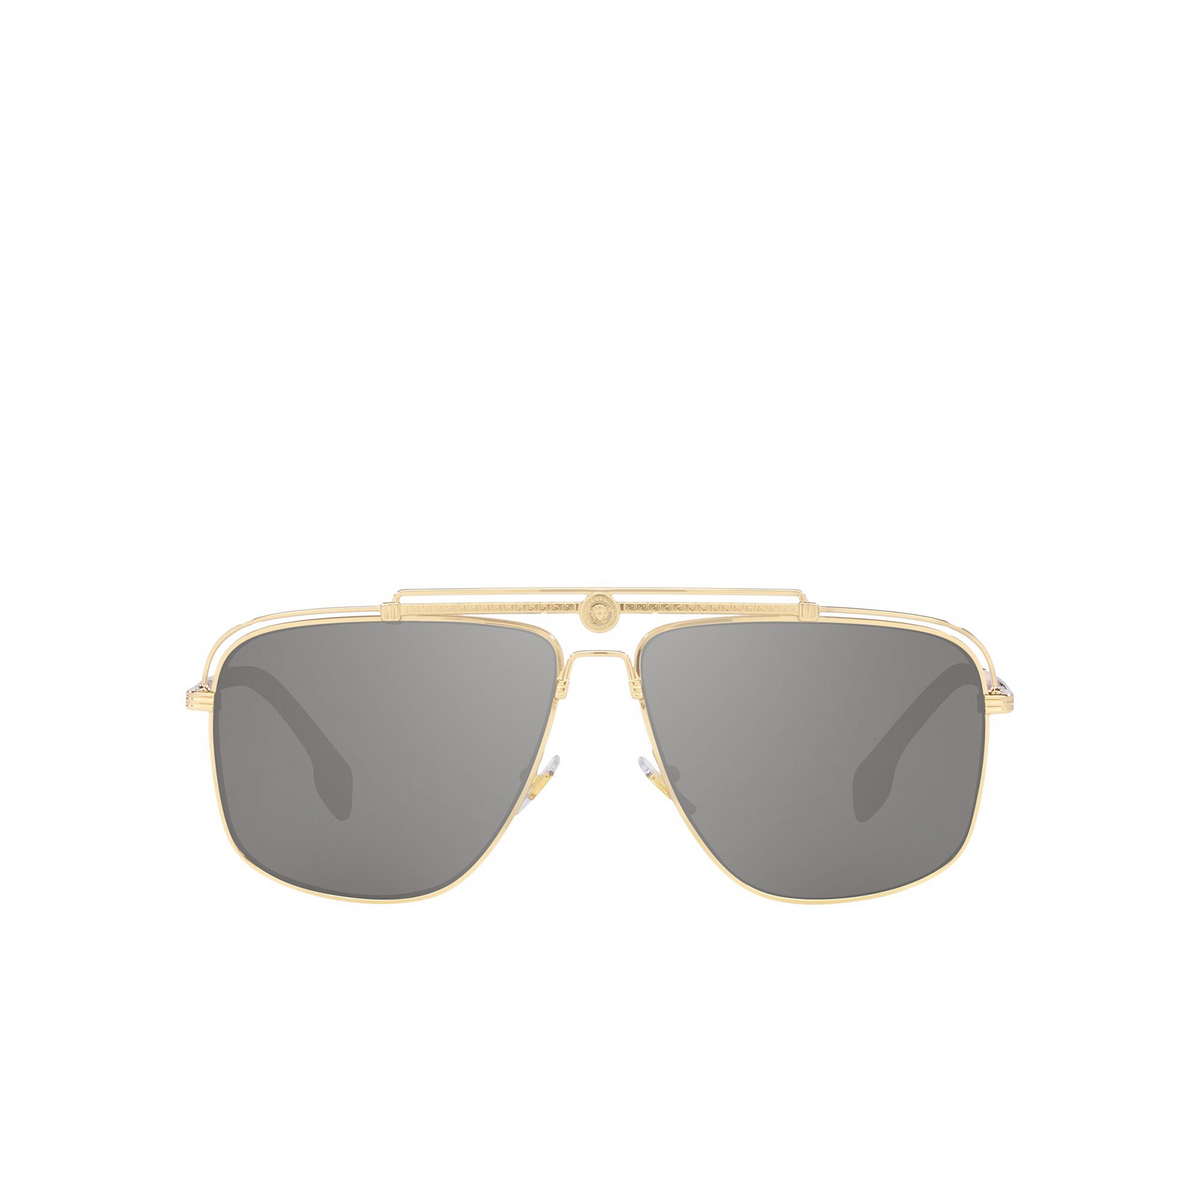 Versace® Square Sunglasses: VE2242 color Pale Gold 12526G - front view.